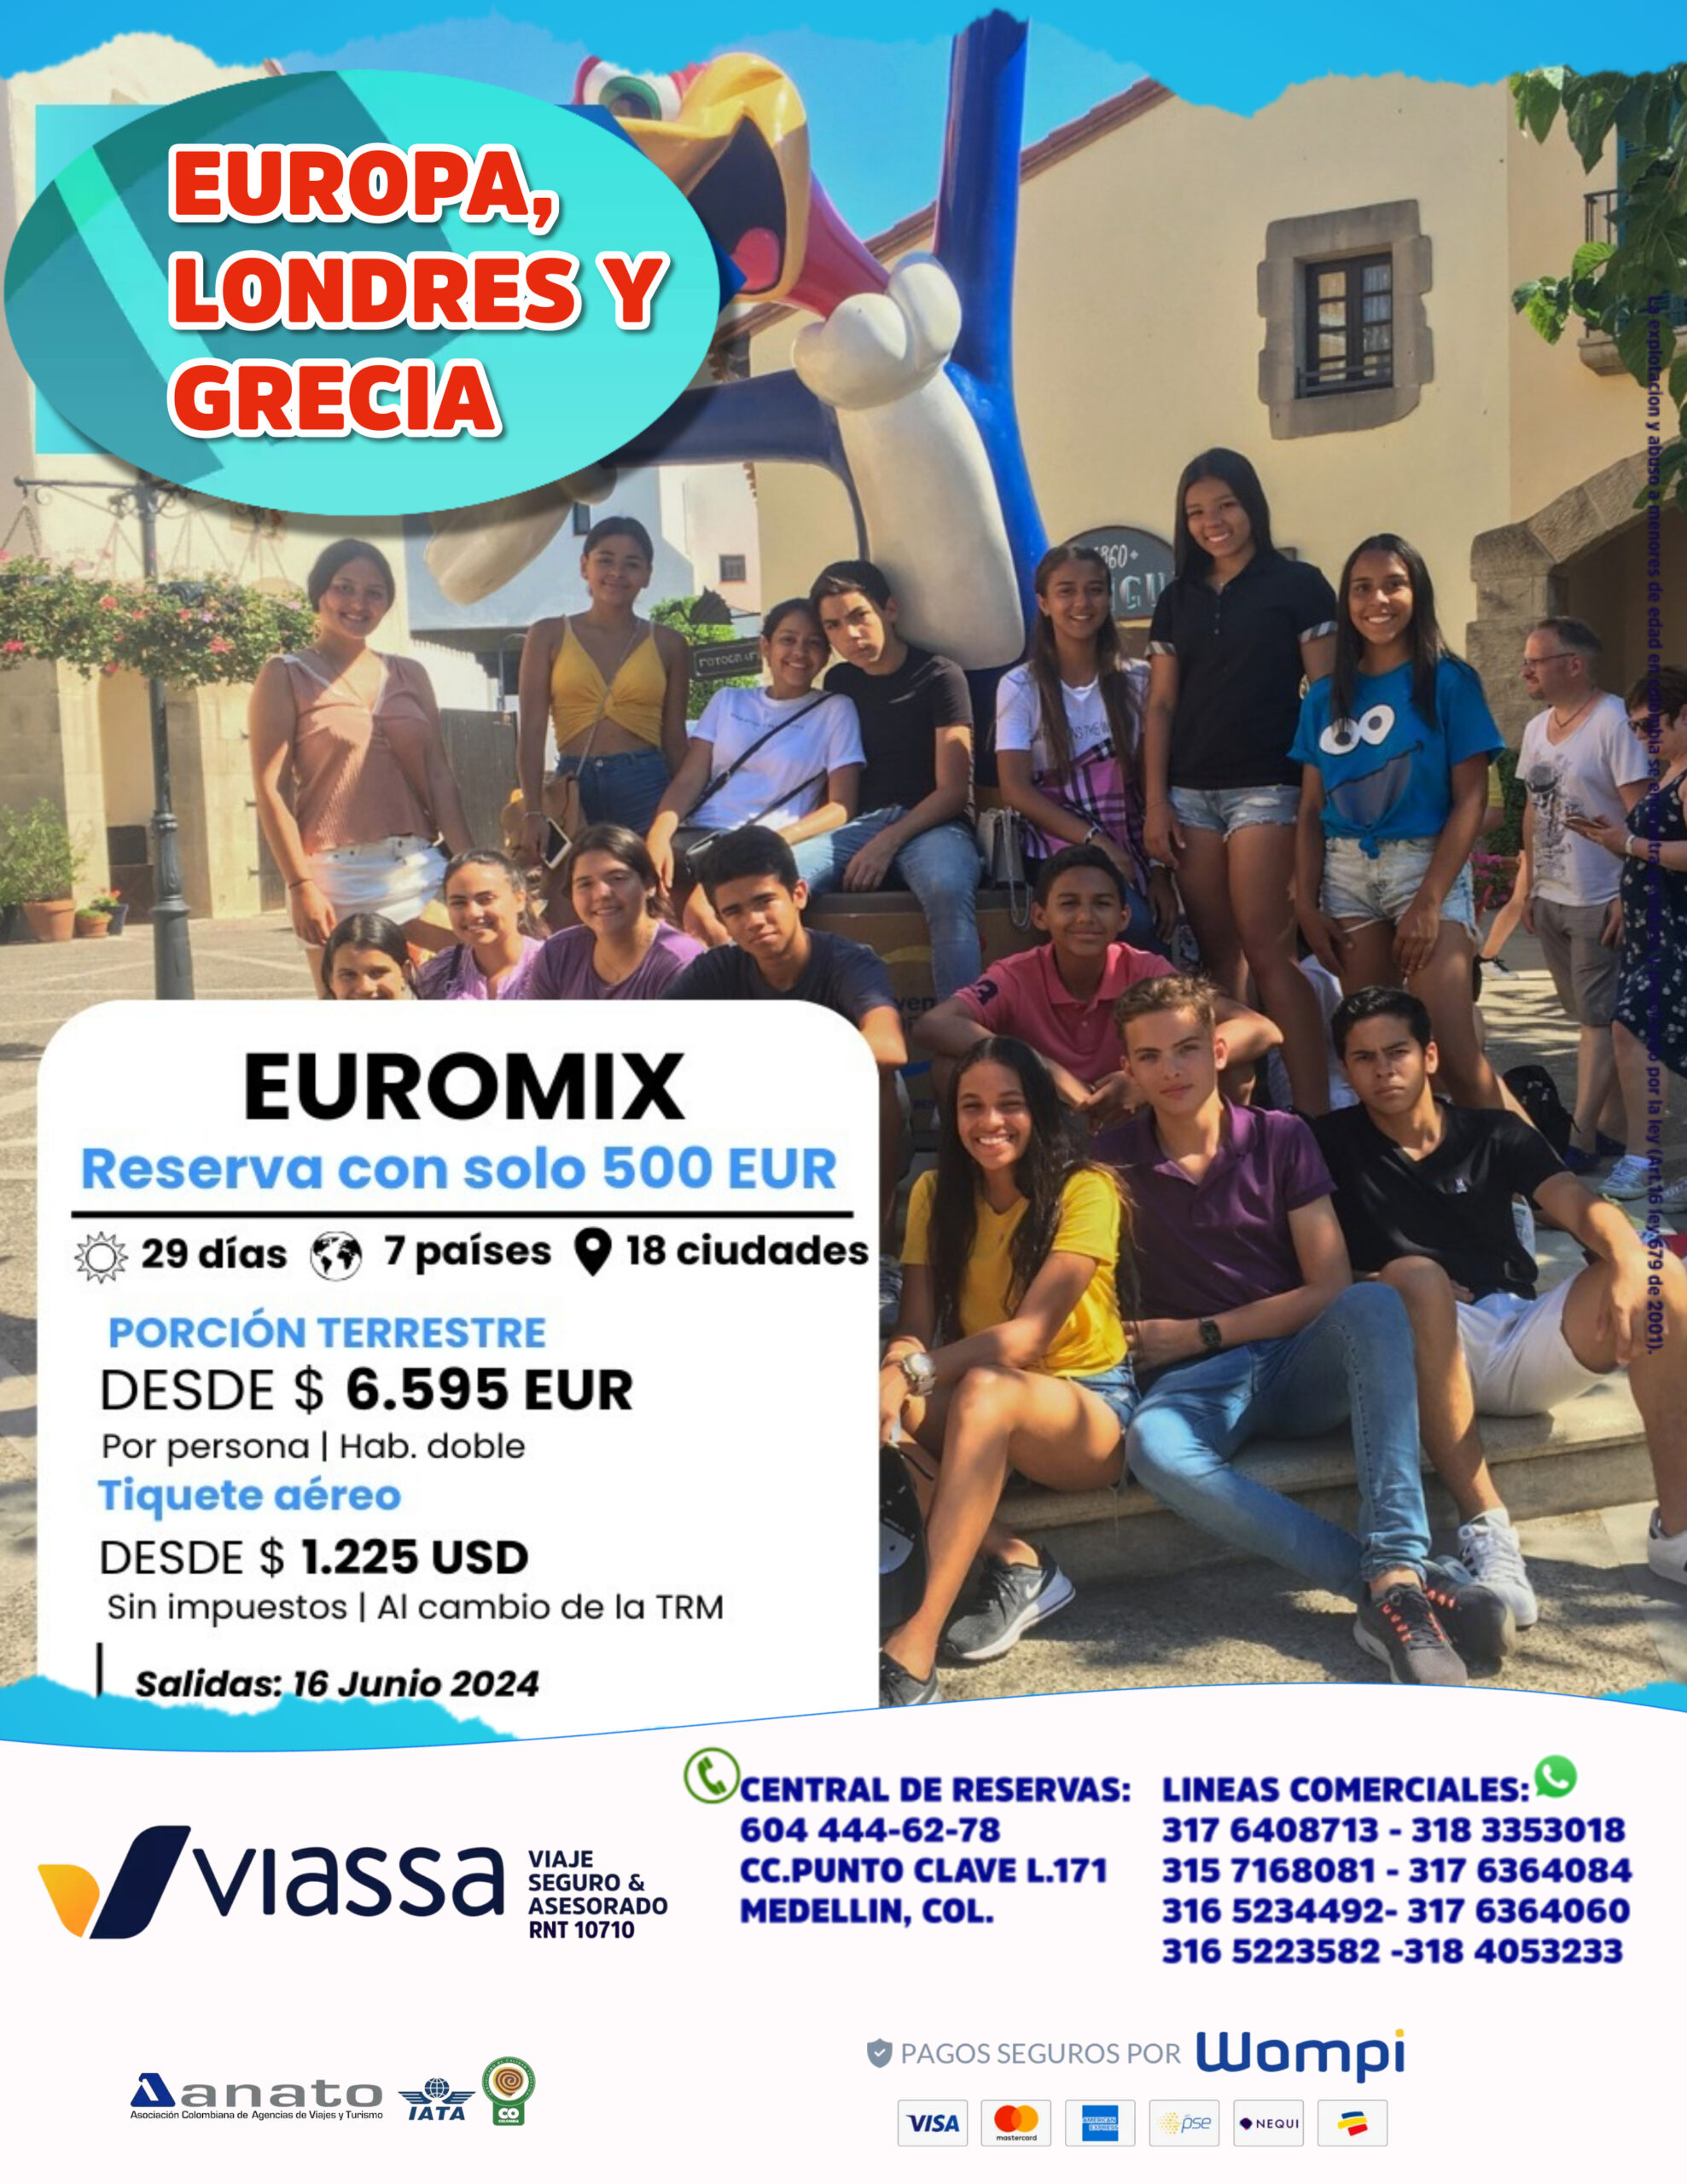 EXCURSION – EUROPA-LONDRES Y GRECIA (EUROMIX)